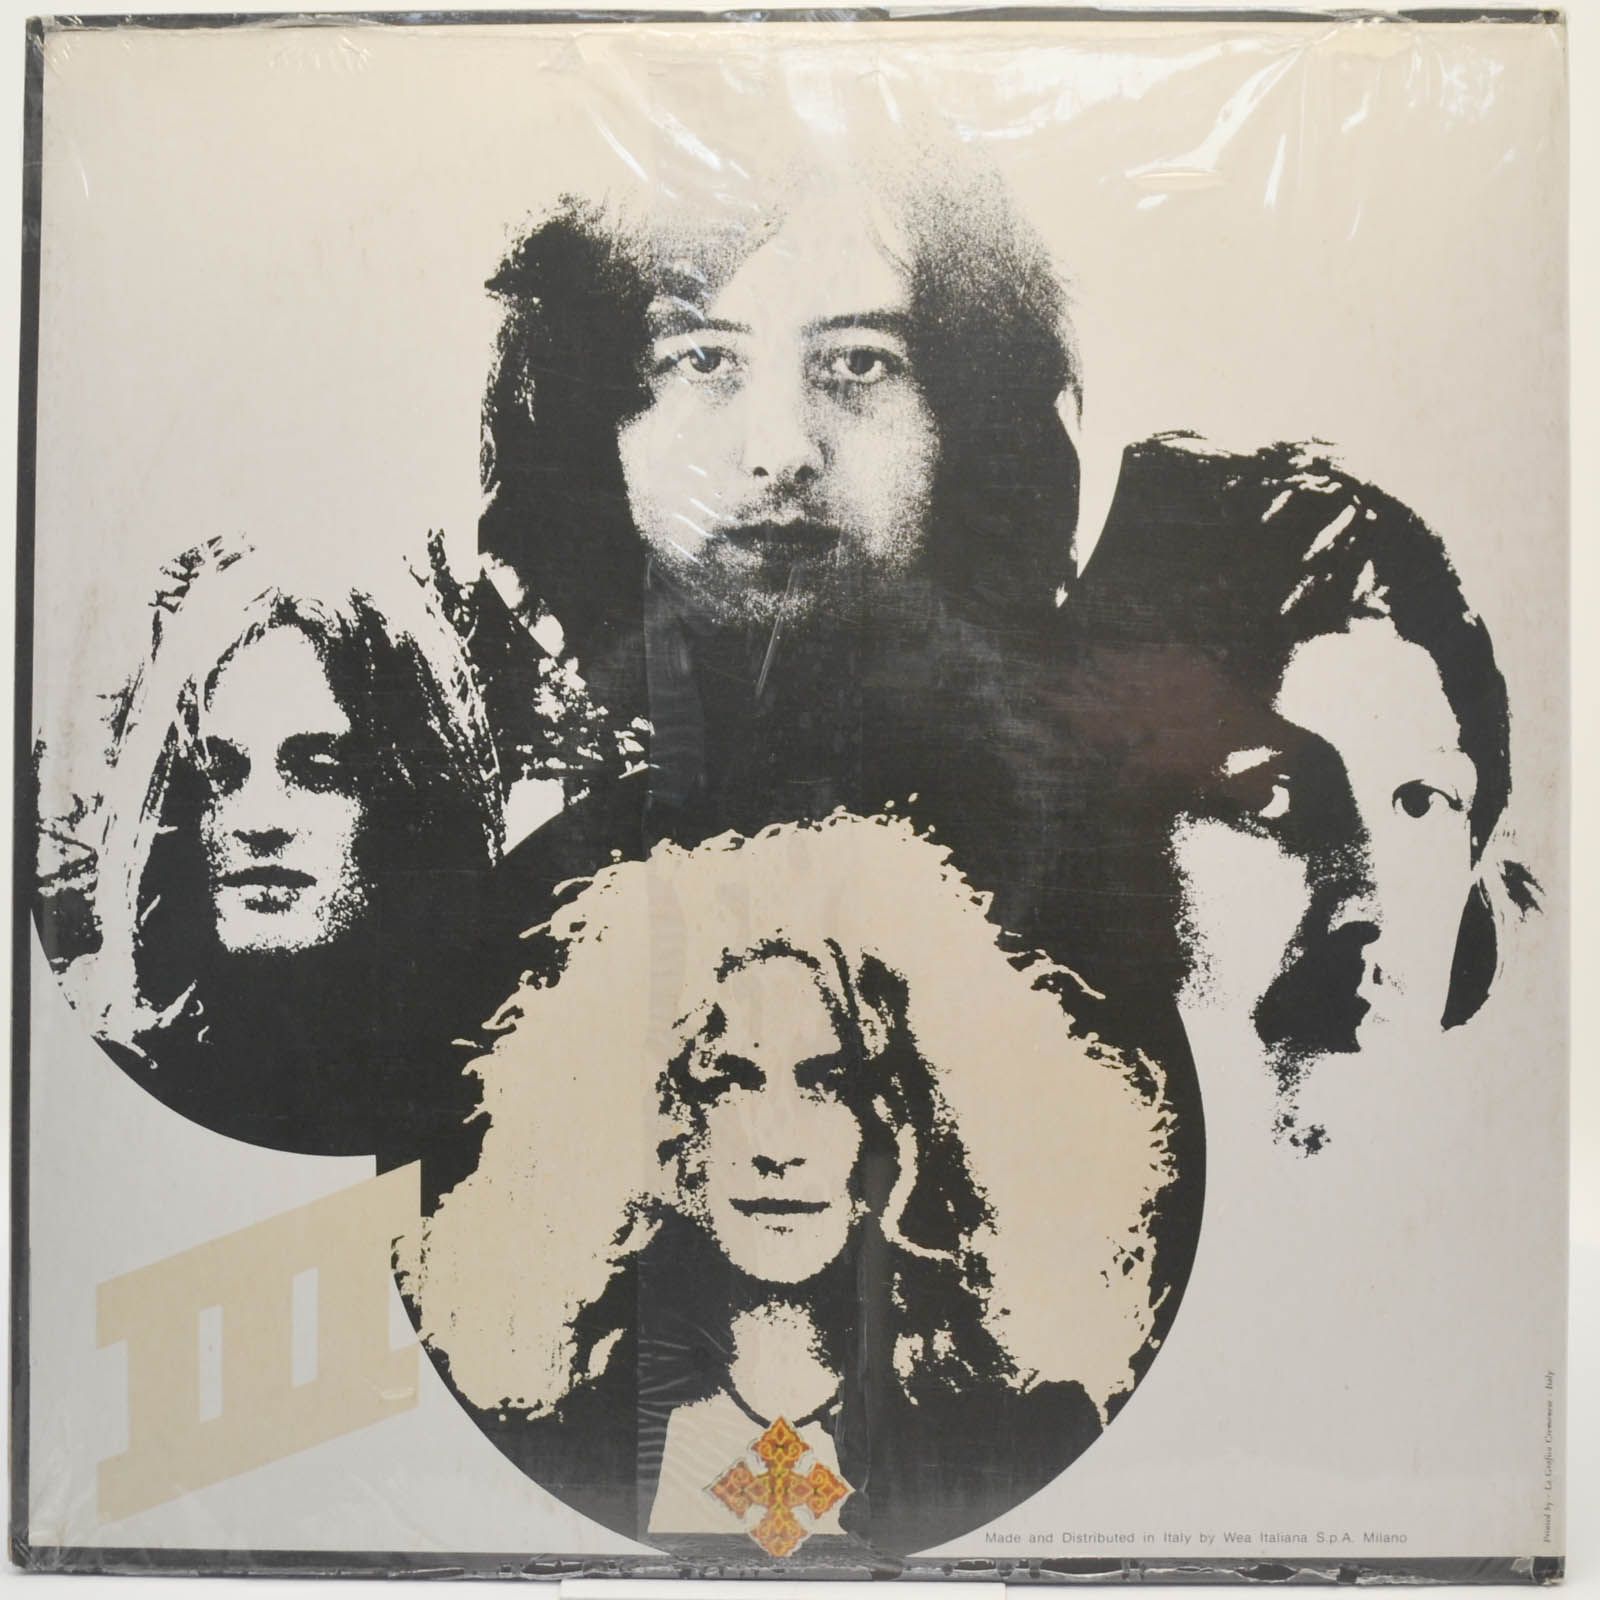 Led Zeppelin — Led Zeppelin III, 1976